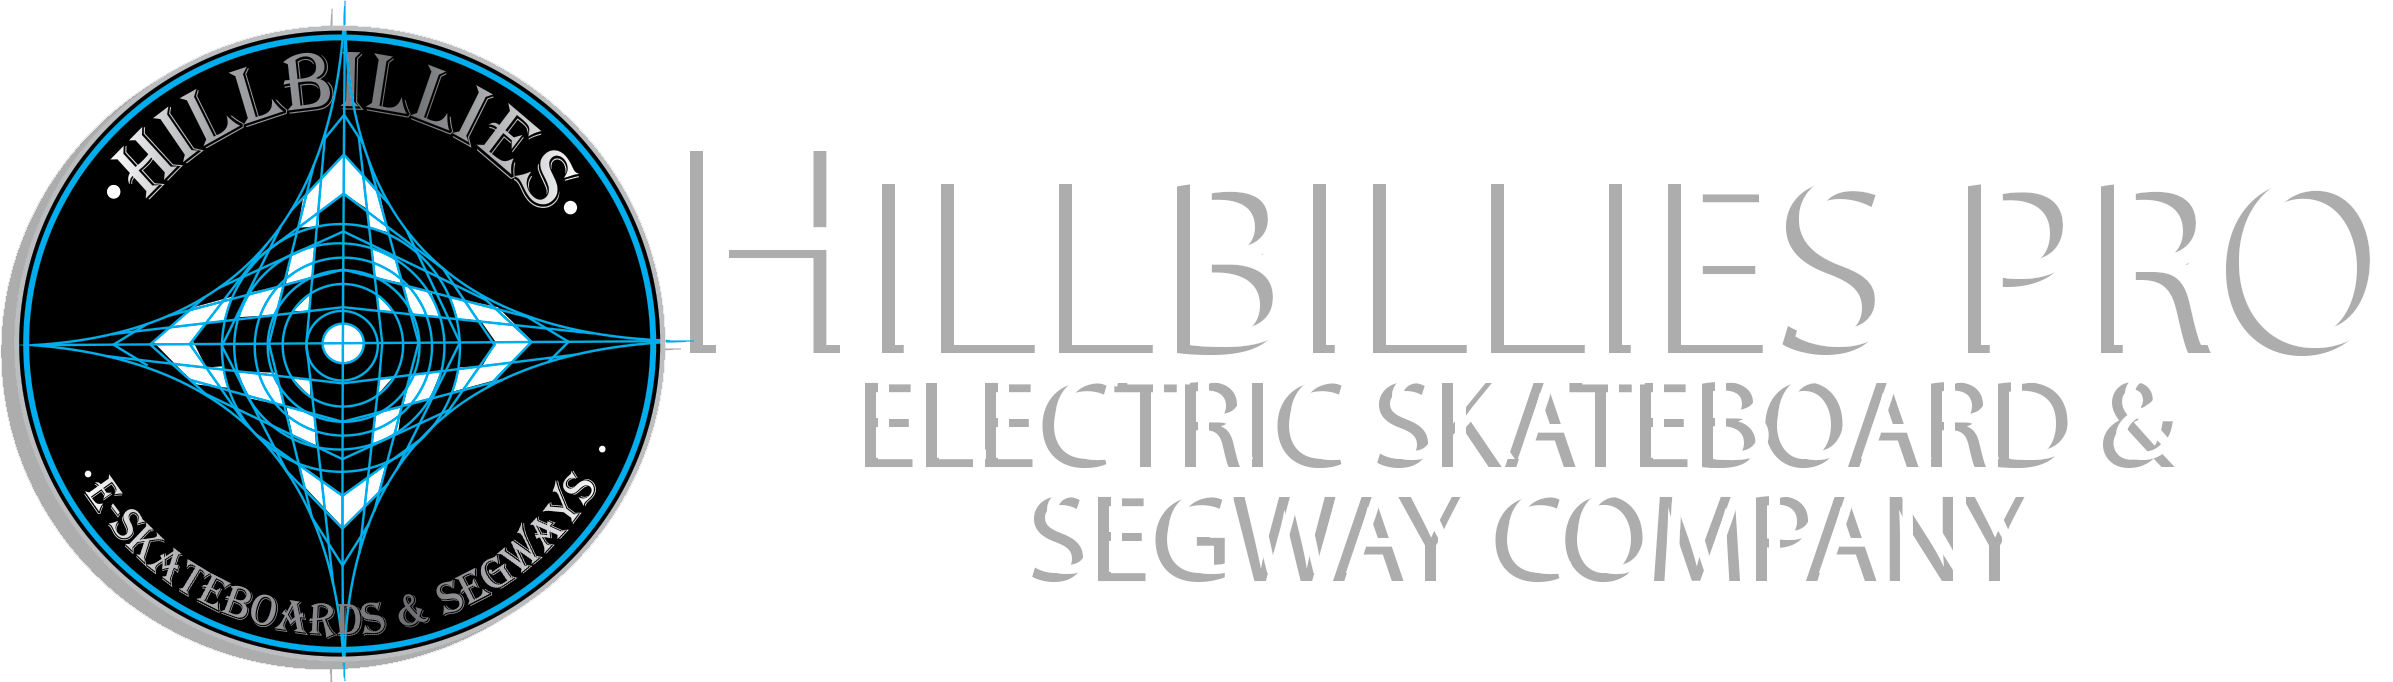 HBPRO Electrical skateboards & Segways